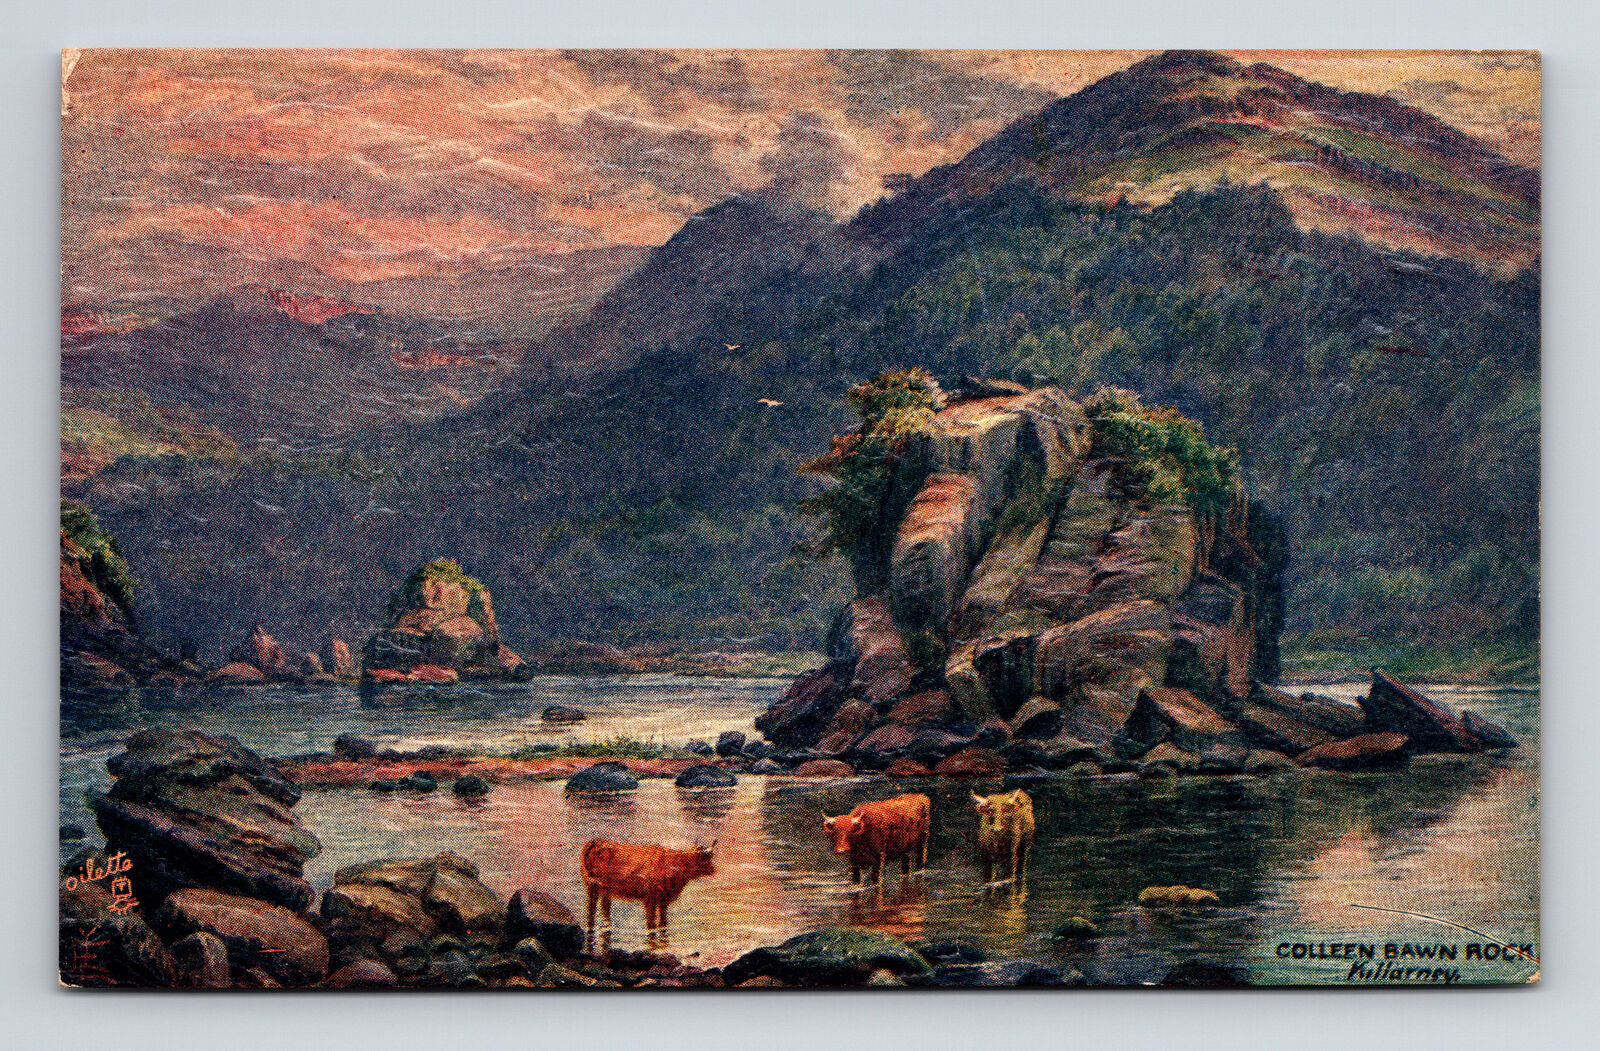 Colleen Bawn Rock Middle Lake Killarney Ireland Raphael Tuck\'s Oilette Postcard